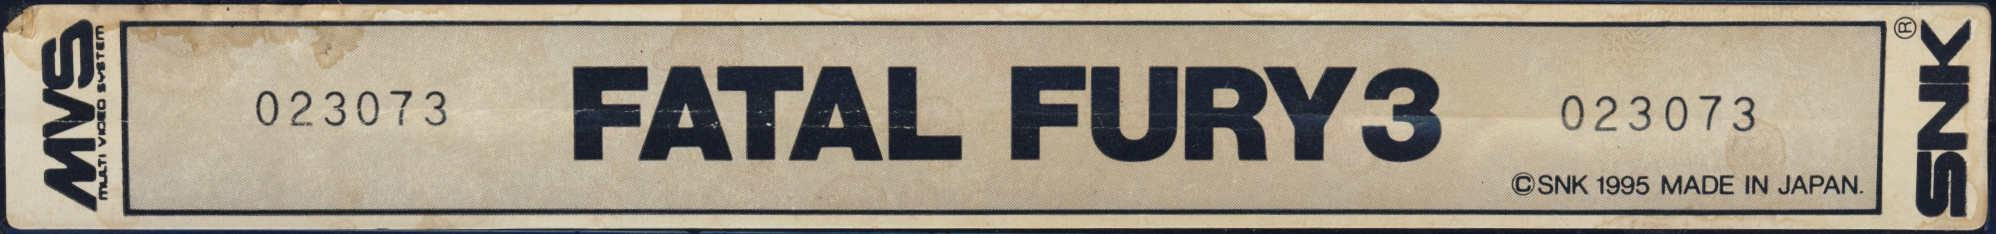 Fatal fury 3 us label.jpg